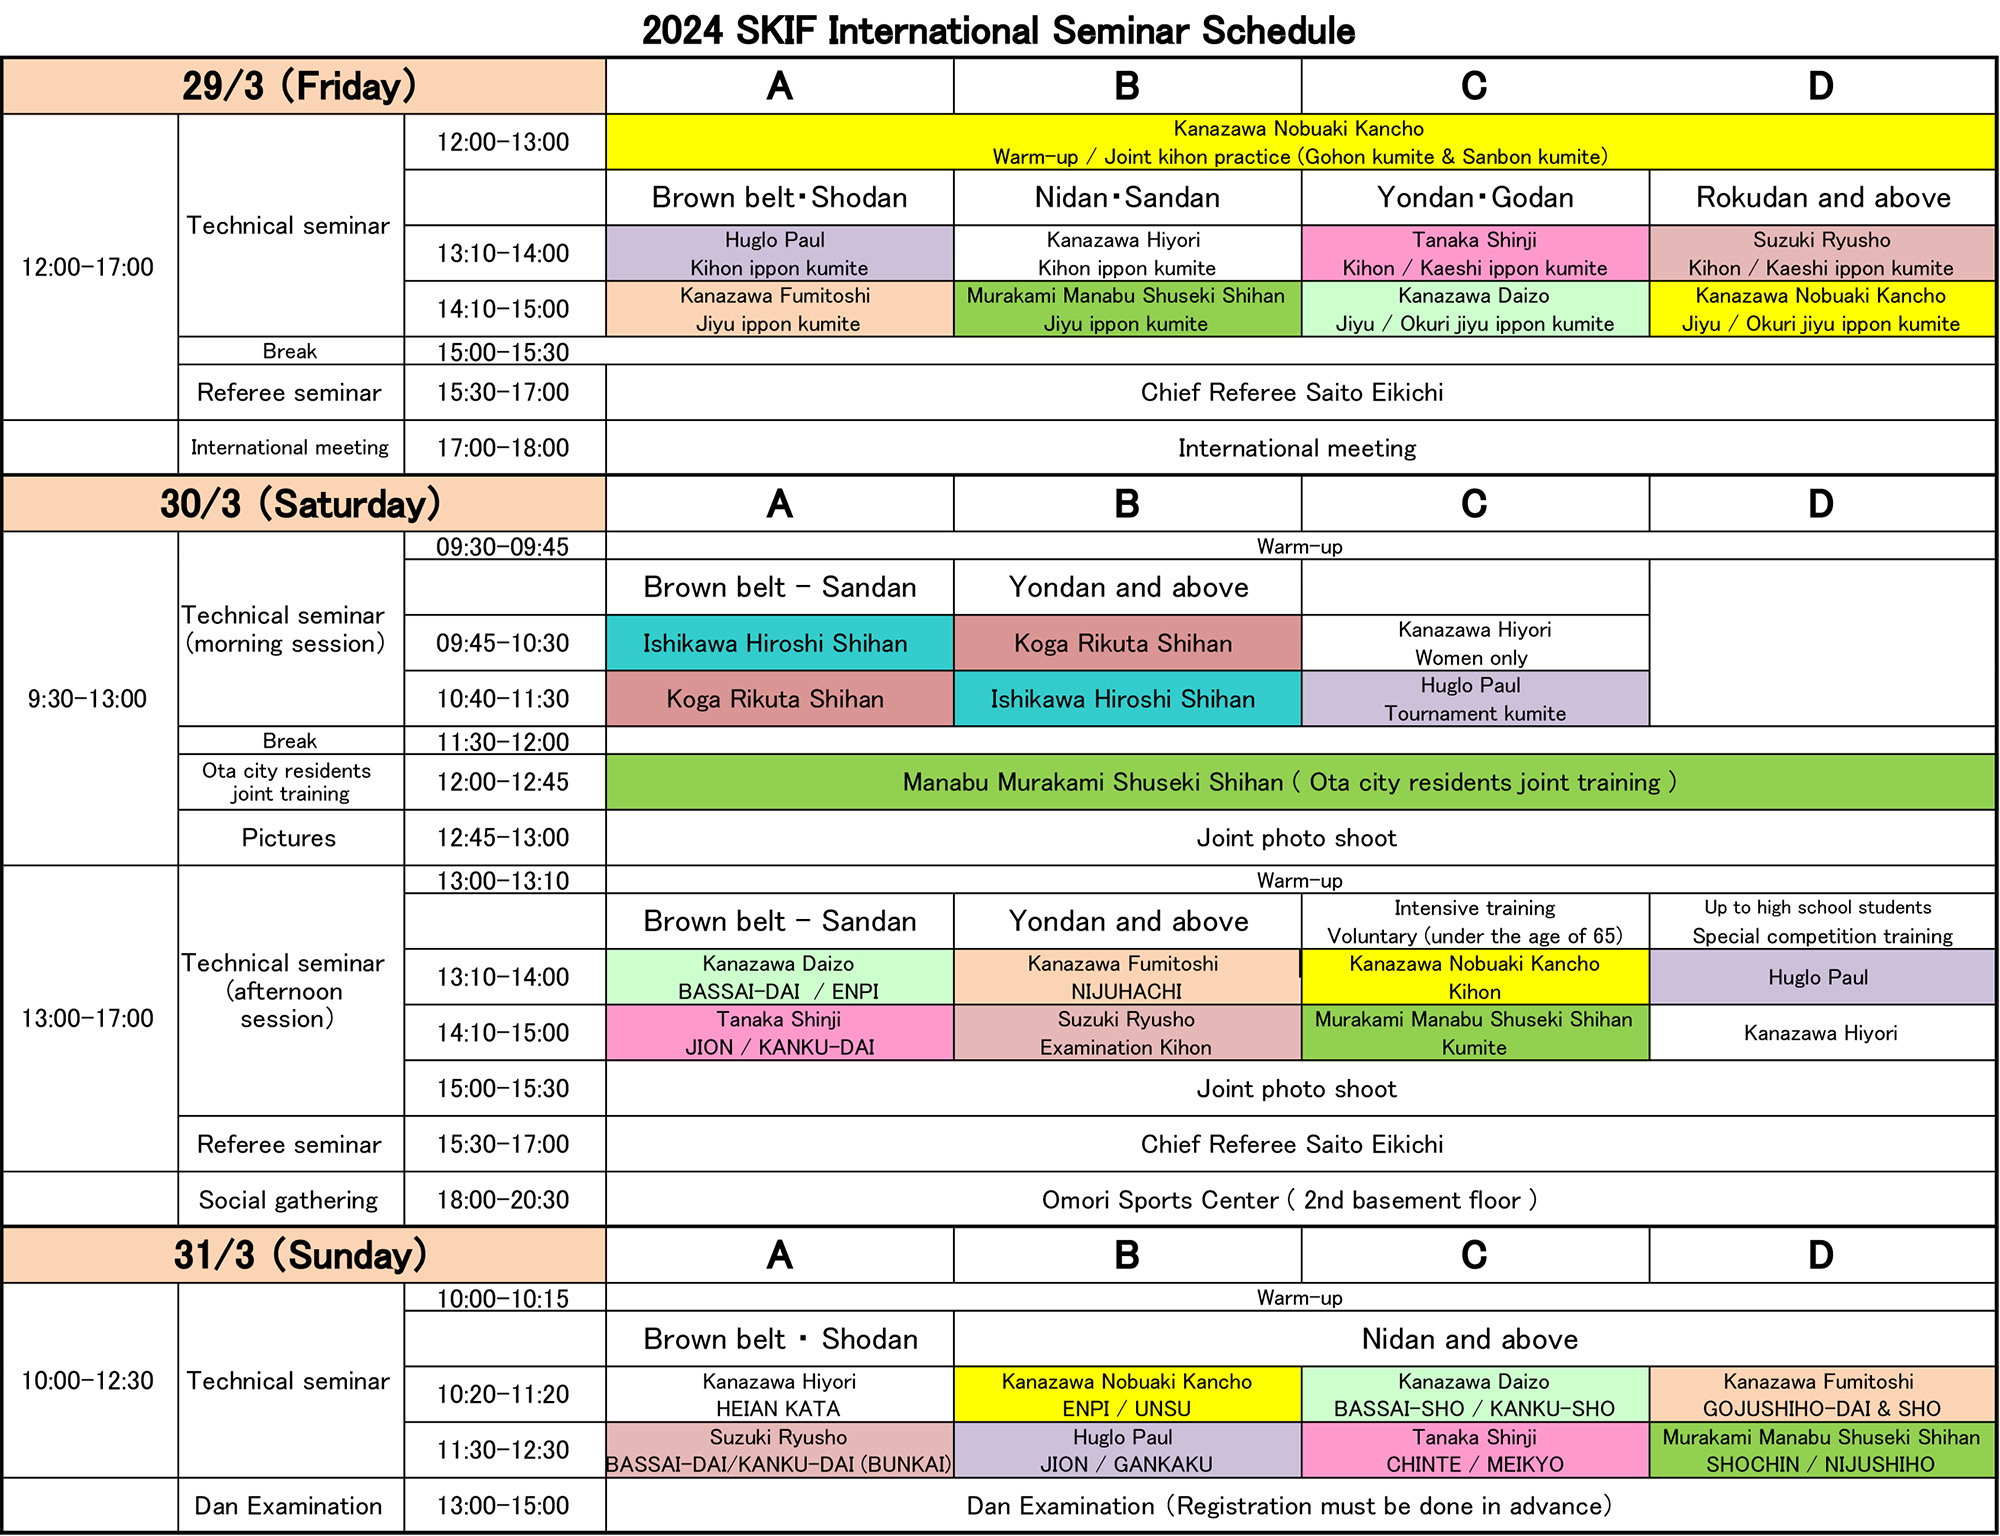 2024 SKIF International Seminar Schedule